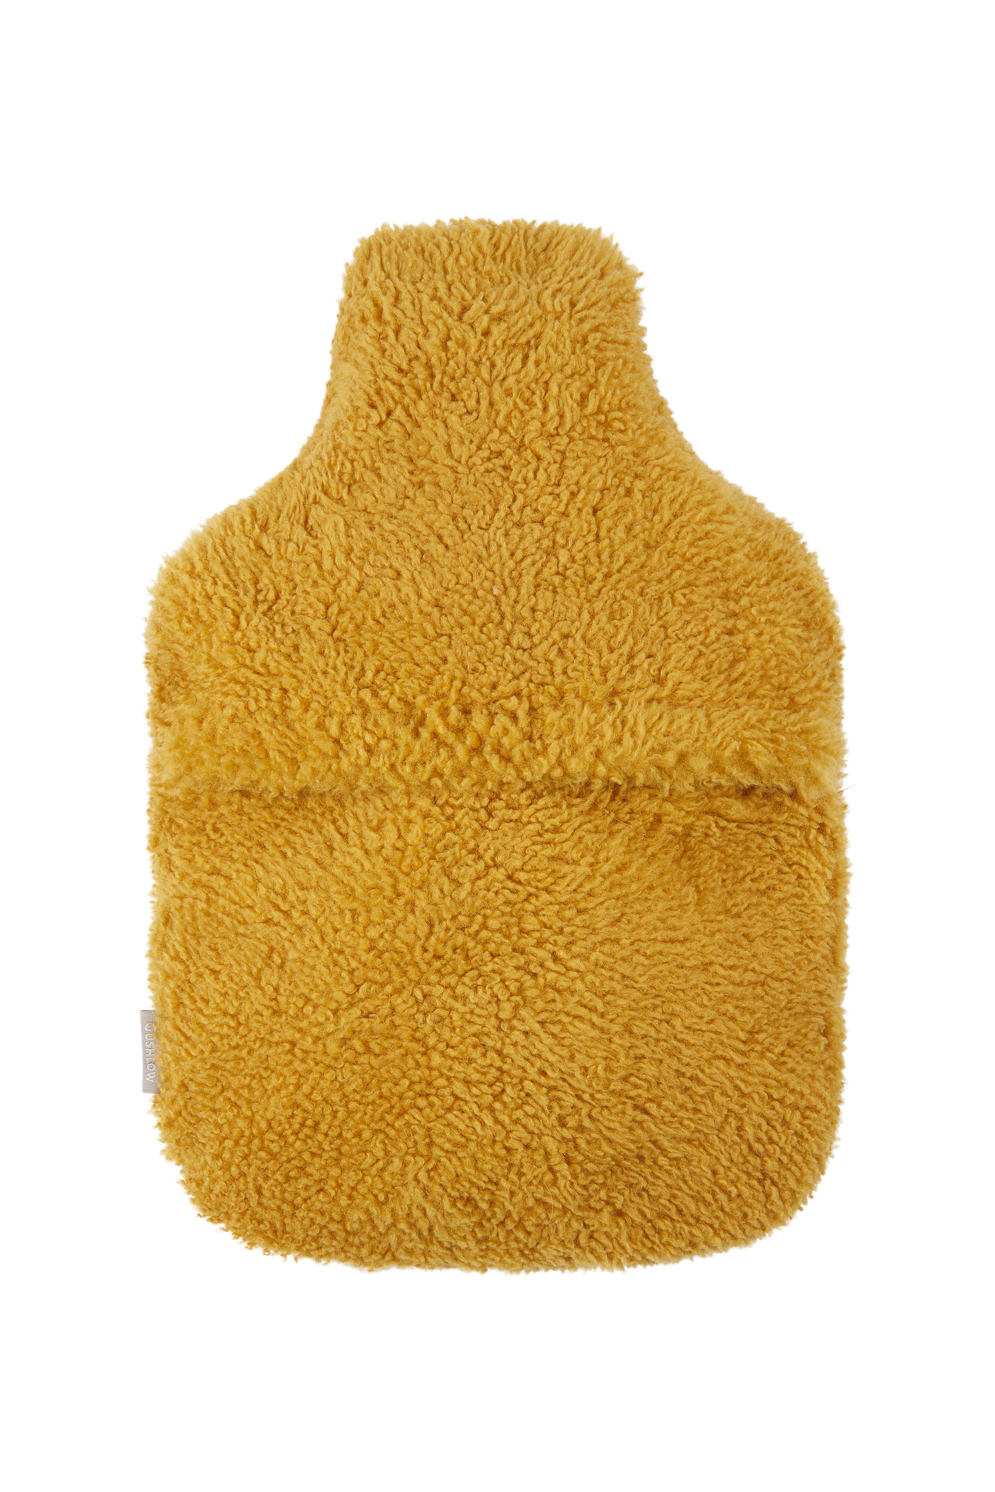 Yellow Shearling Hot Water Bottle Cover | Homeware | Gushlow & Cole - back